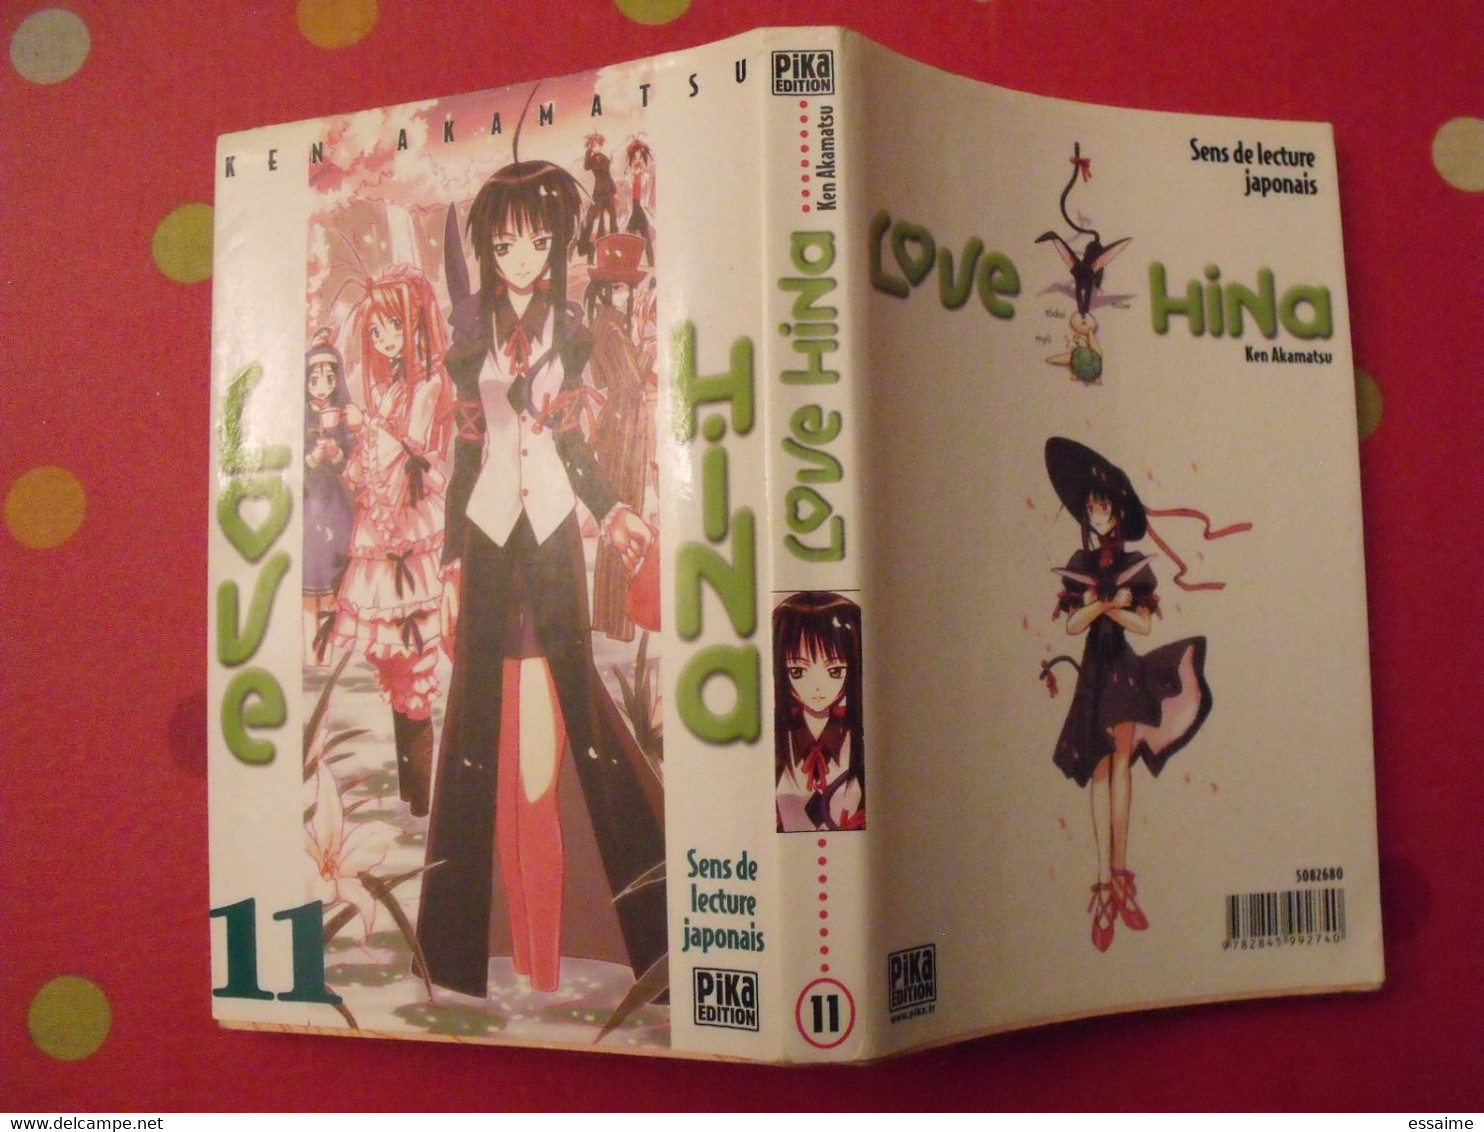 lot de 12 tomes de "Love Hina". Ken Akamatsu. Pika édition 2002-04.